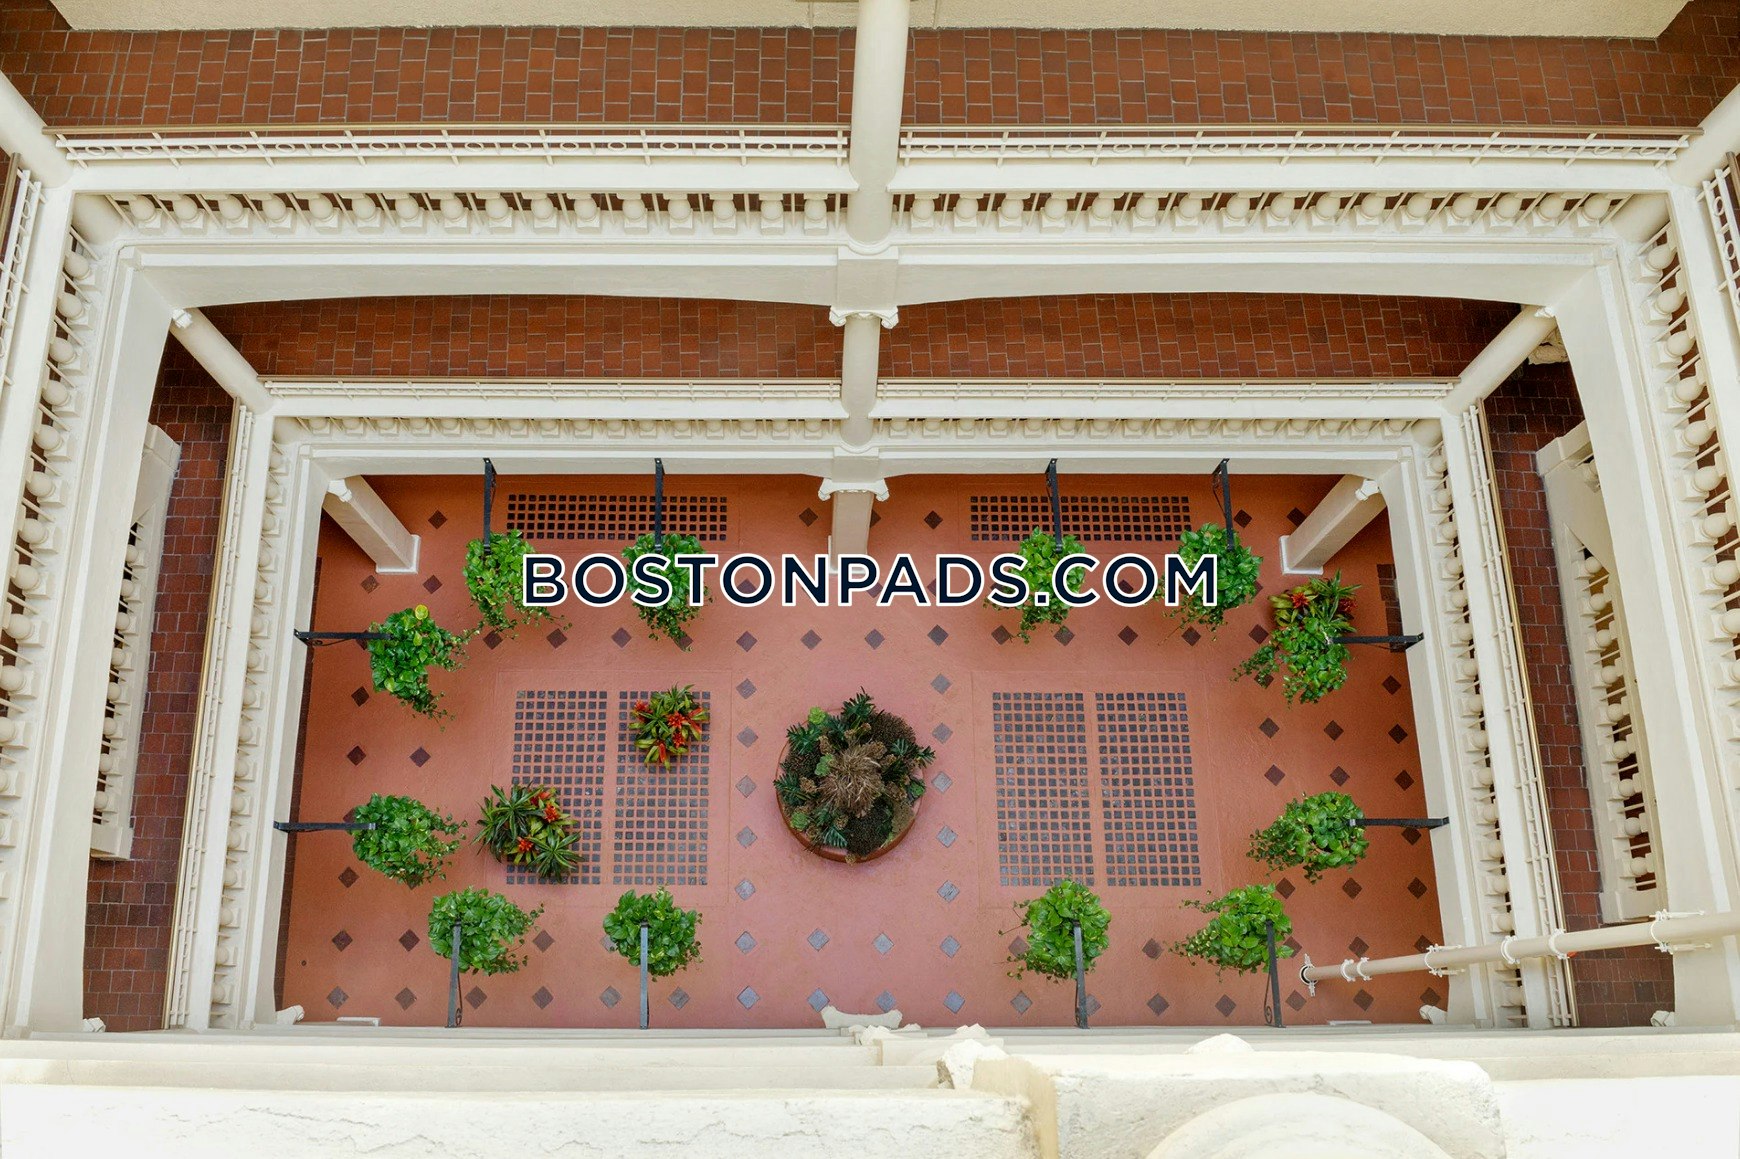 Haviland St. Boston